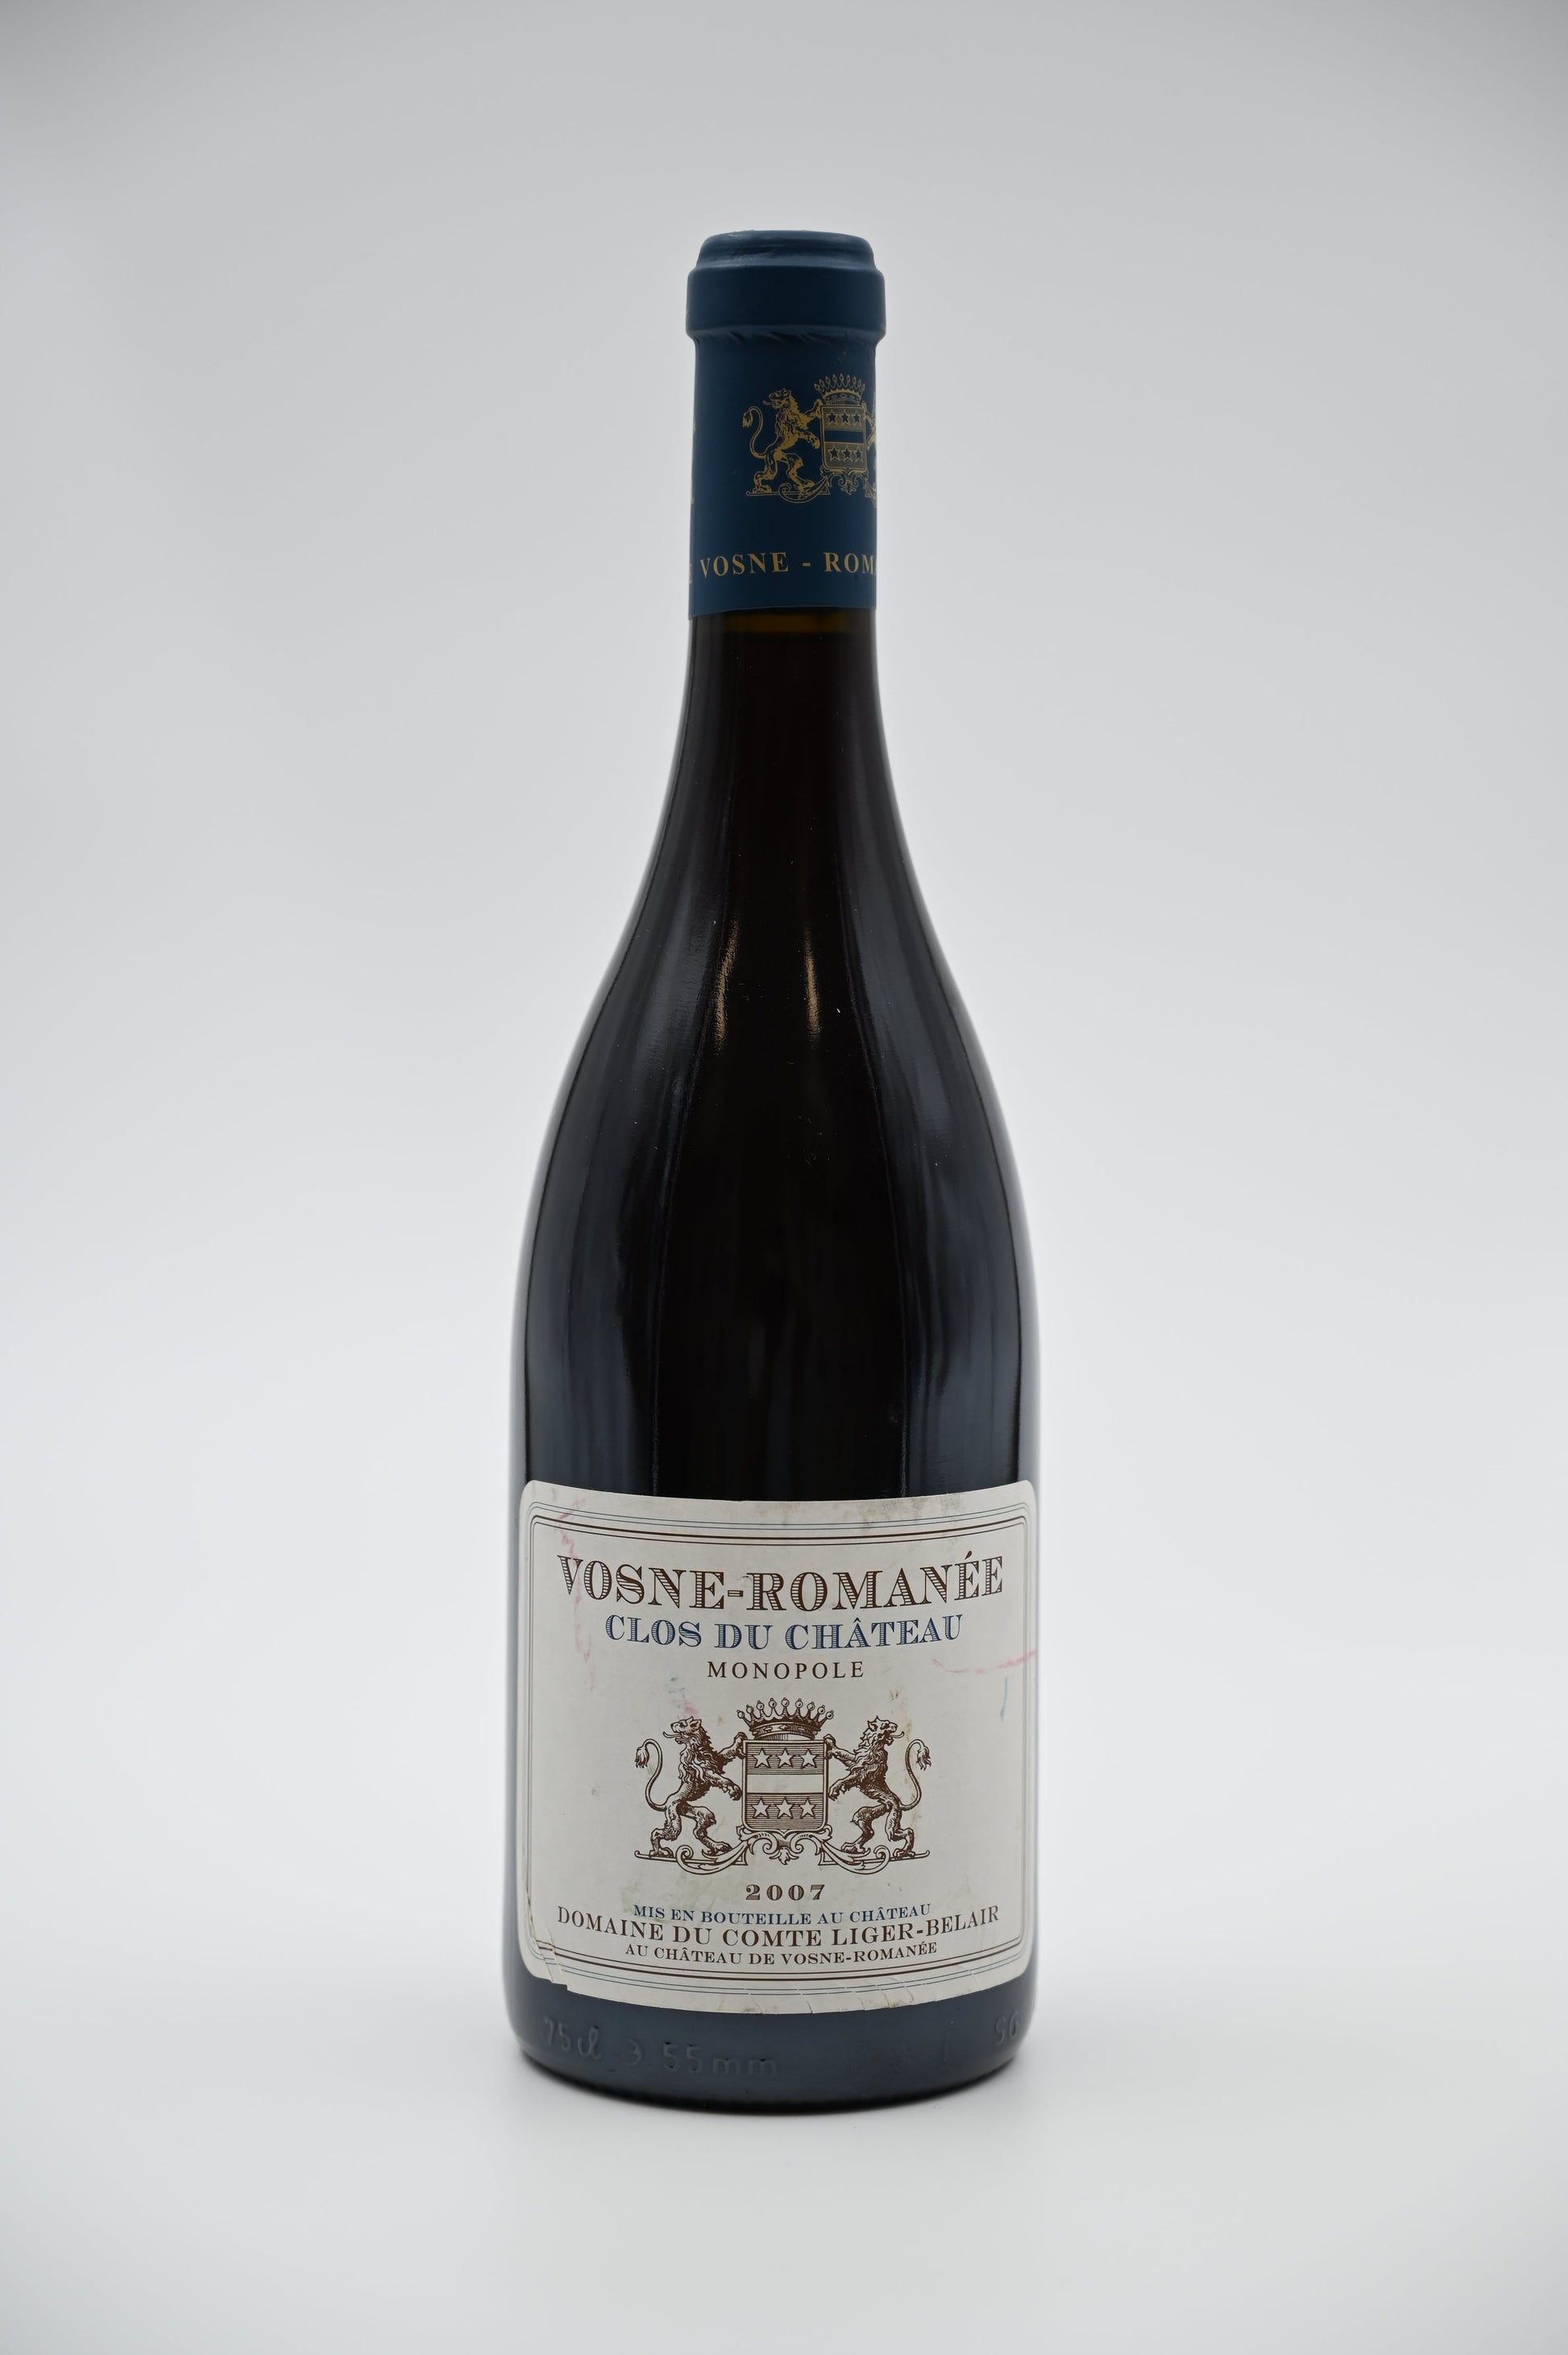 2007 Comte Liger Belair, Vosne Romanee Clos du Chateau 里贝伯爵酒庄城堡园 沃恩罗曼尼村 红葡萄酒 李白